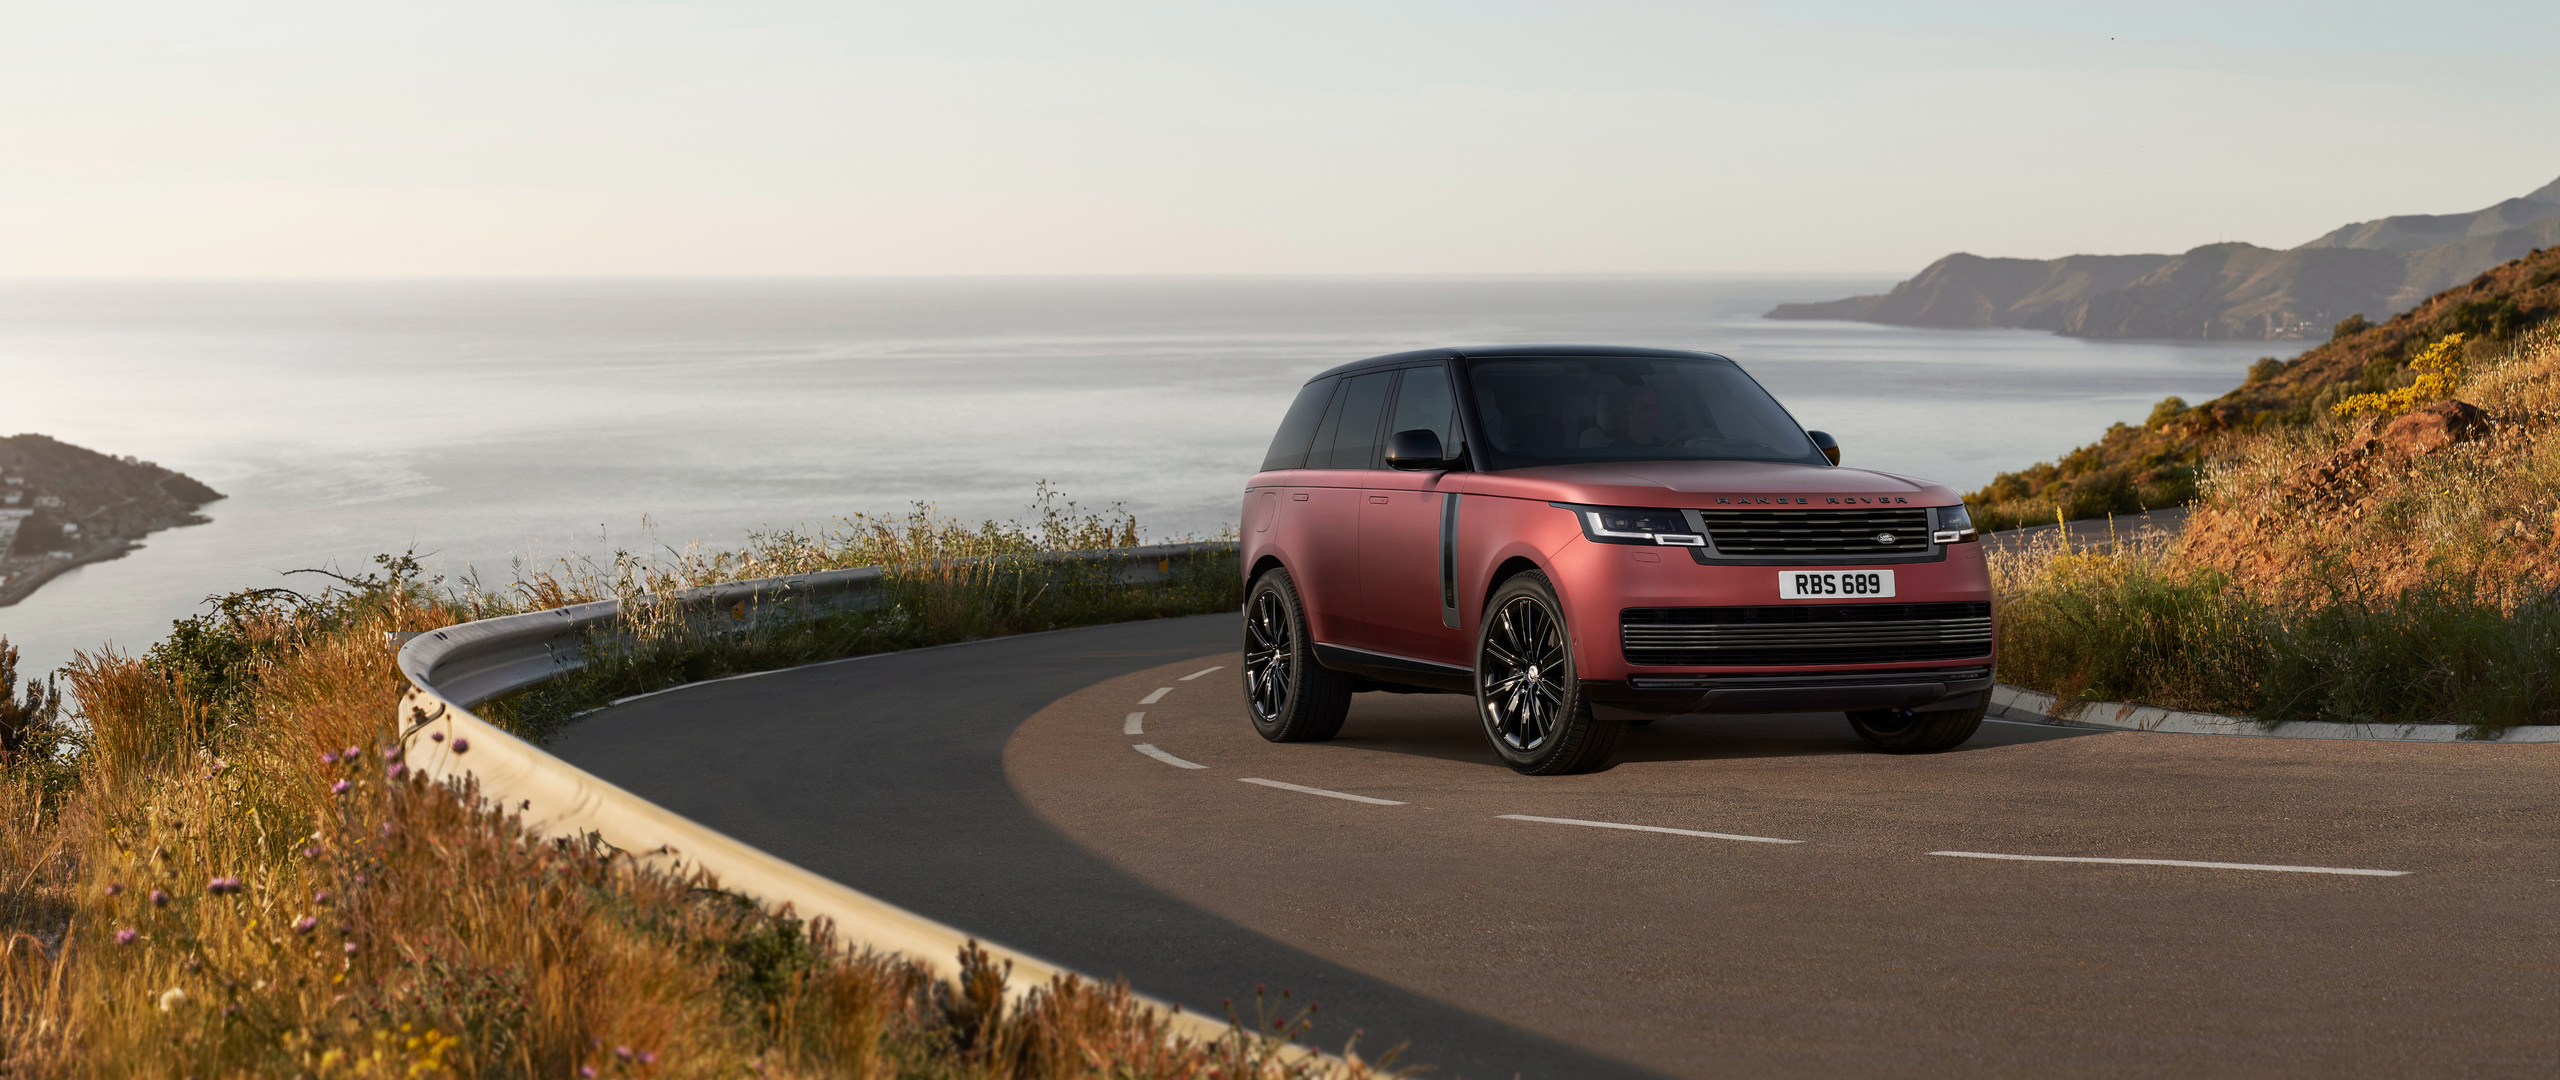 2022 Range Rover SV Intrepid Wallpaper In 2560x1080 Resolution